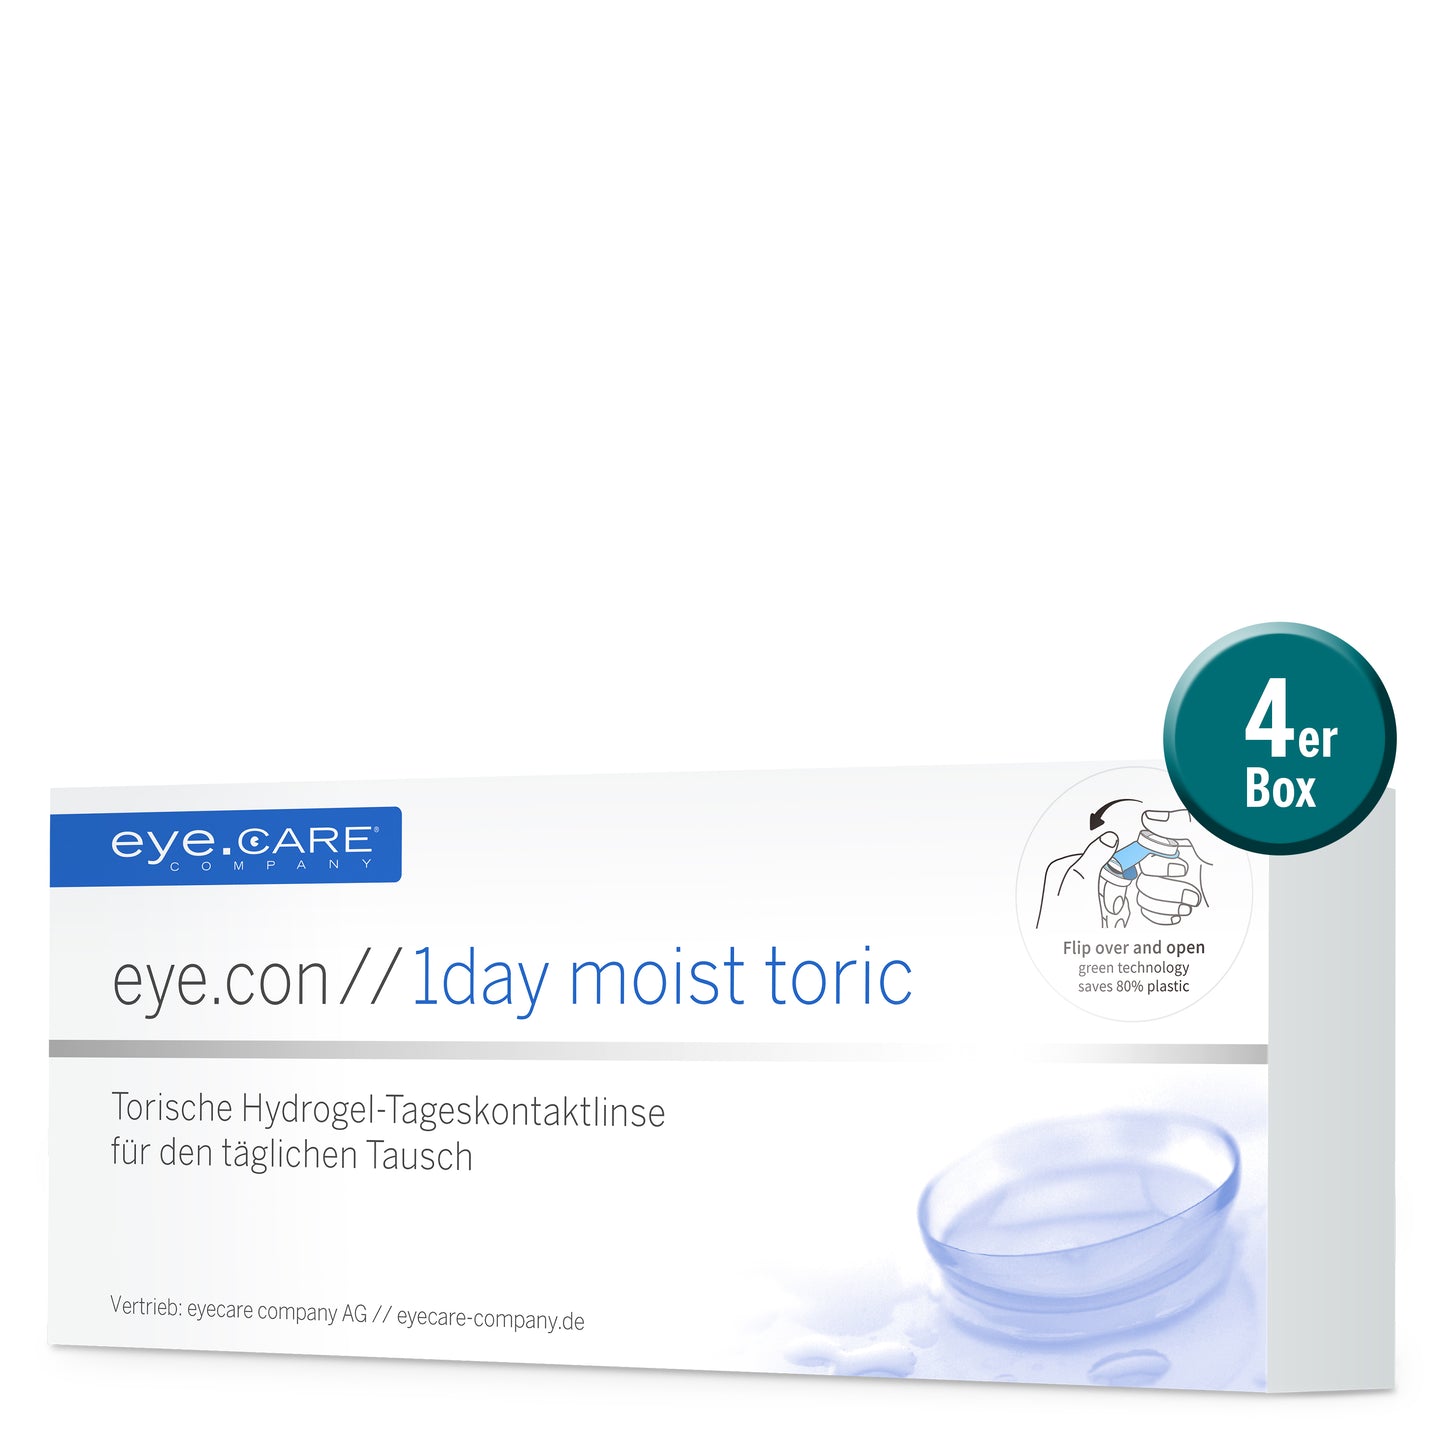 eye.con // 1day moist toric 4er Box